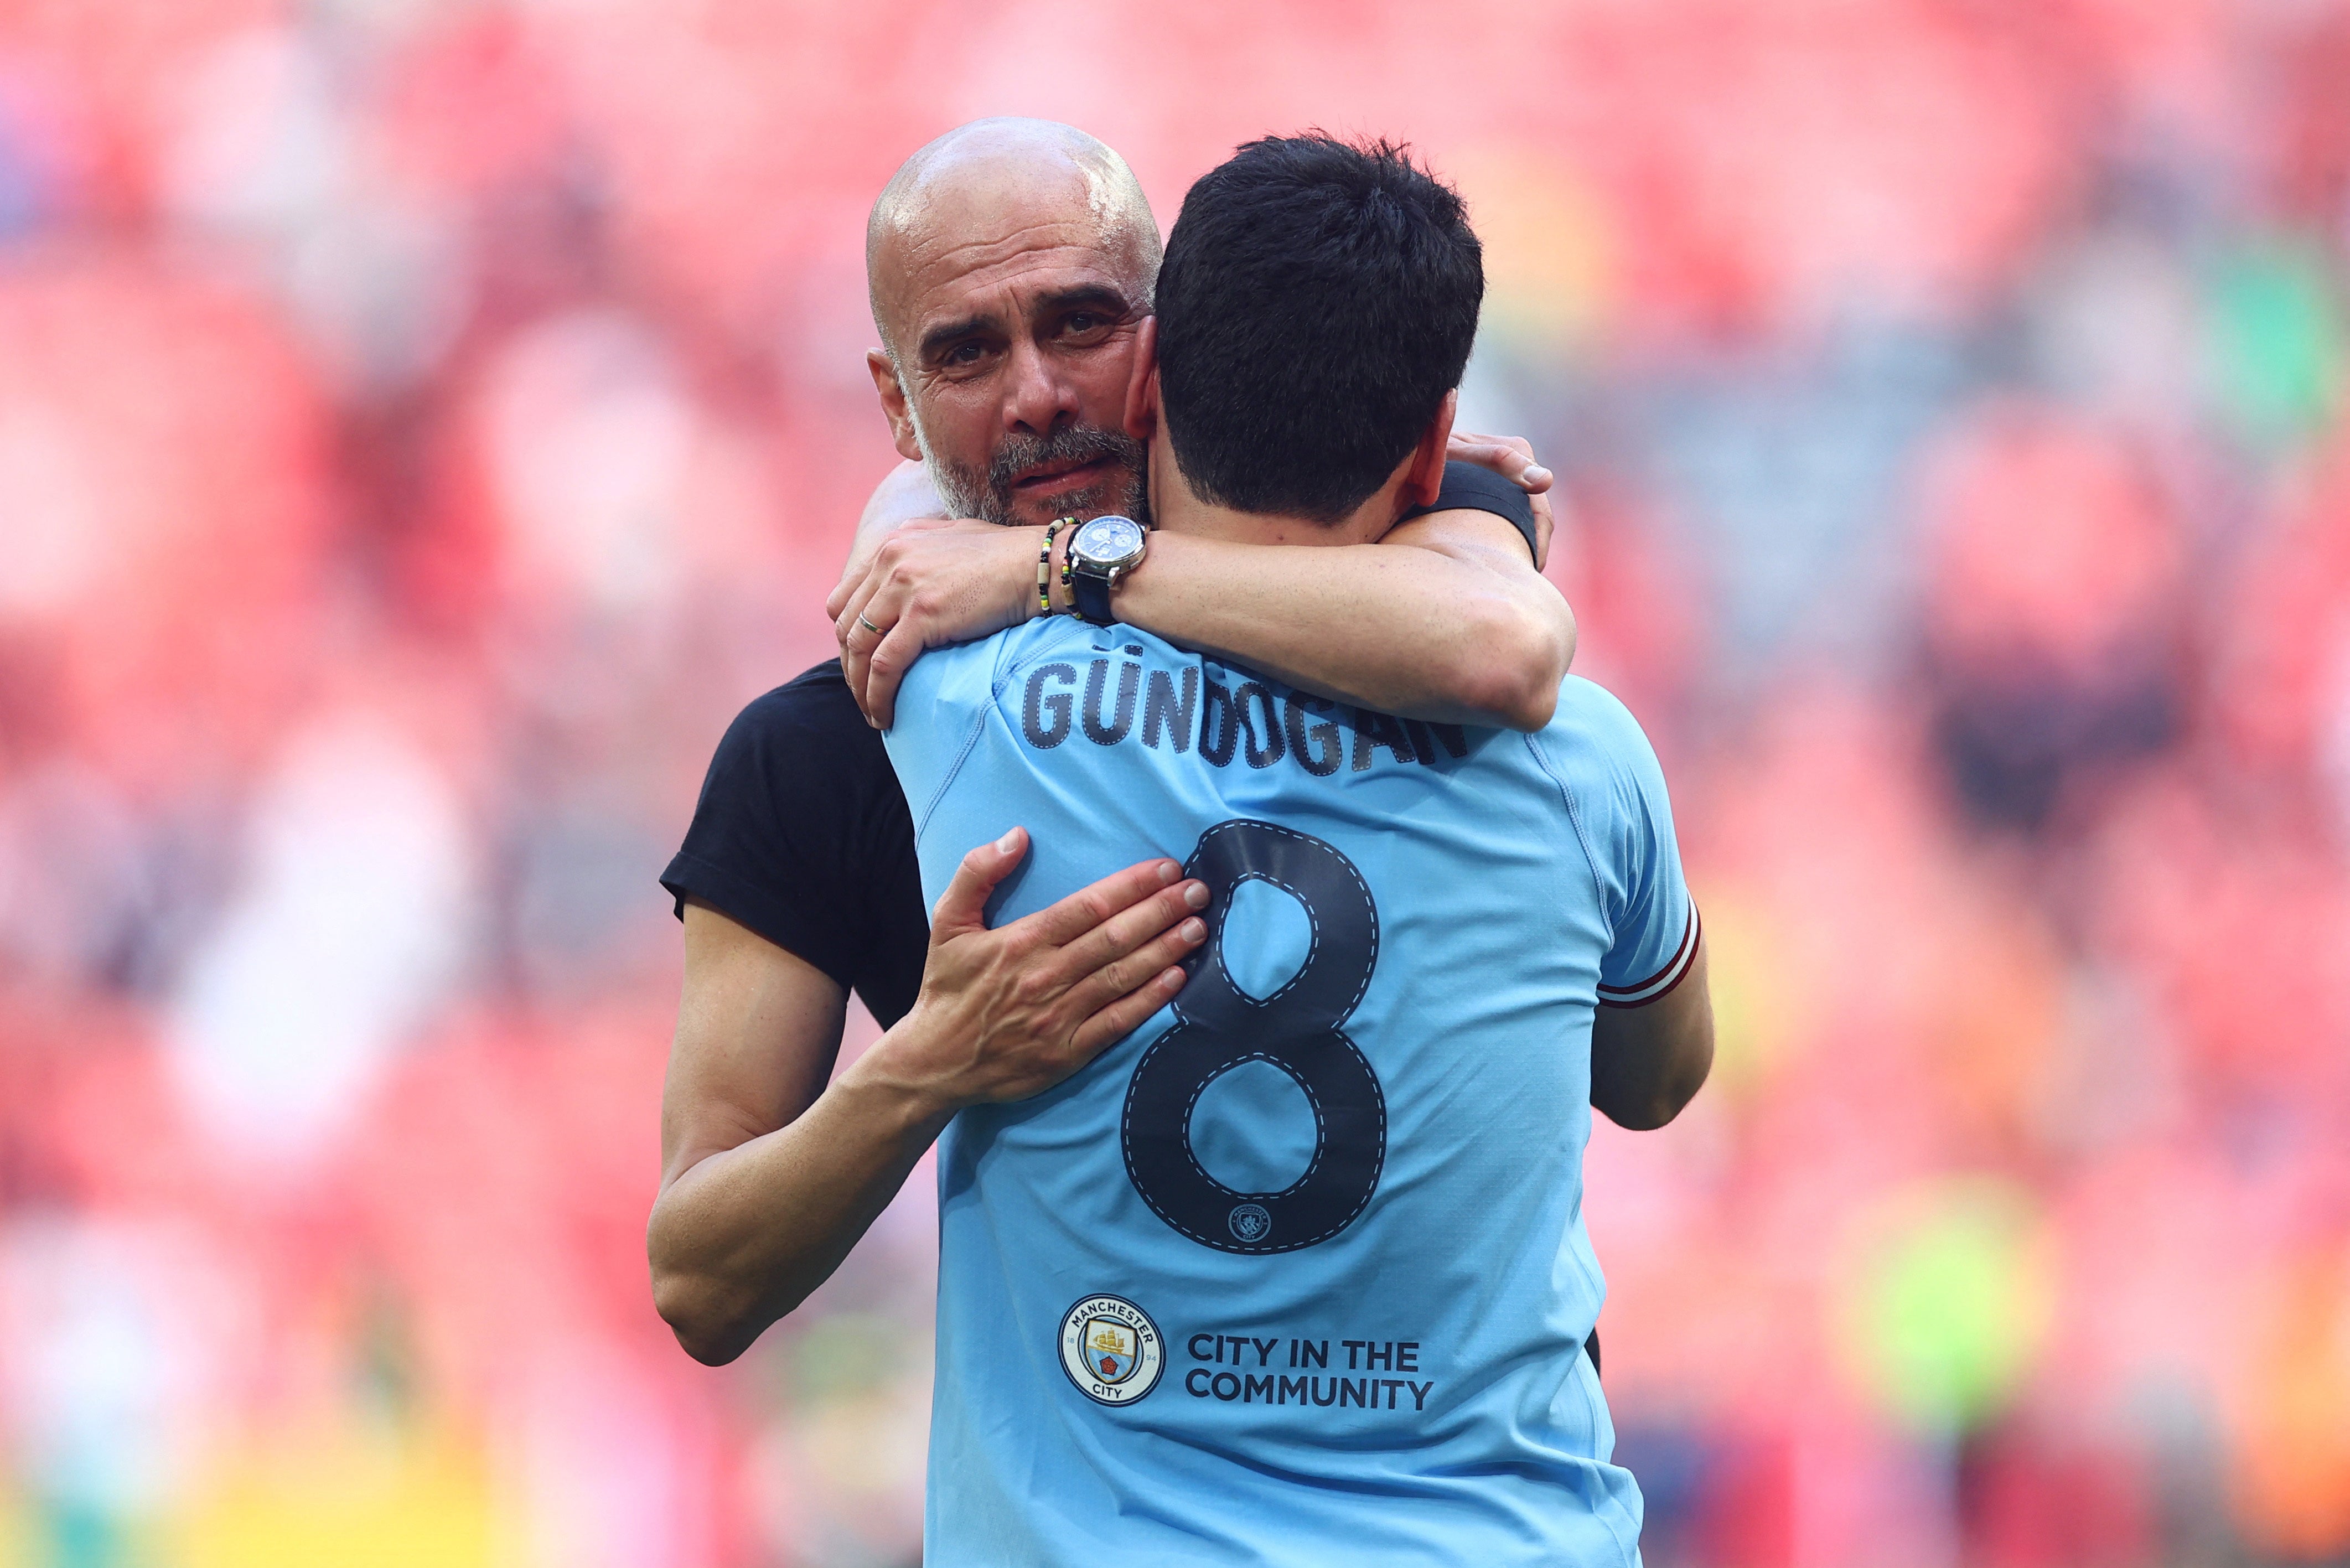 Guardiola embraces Gundogan at full time